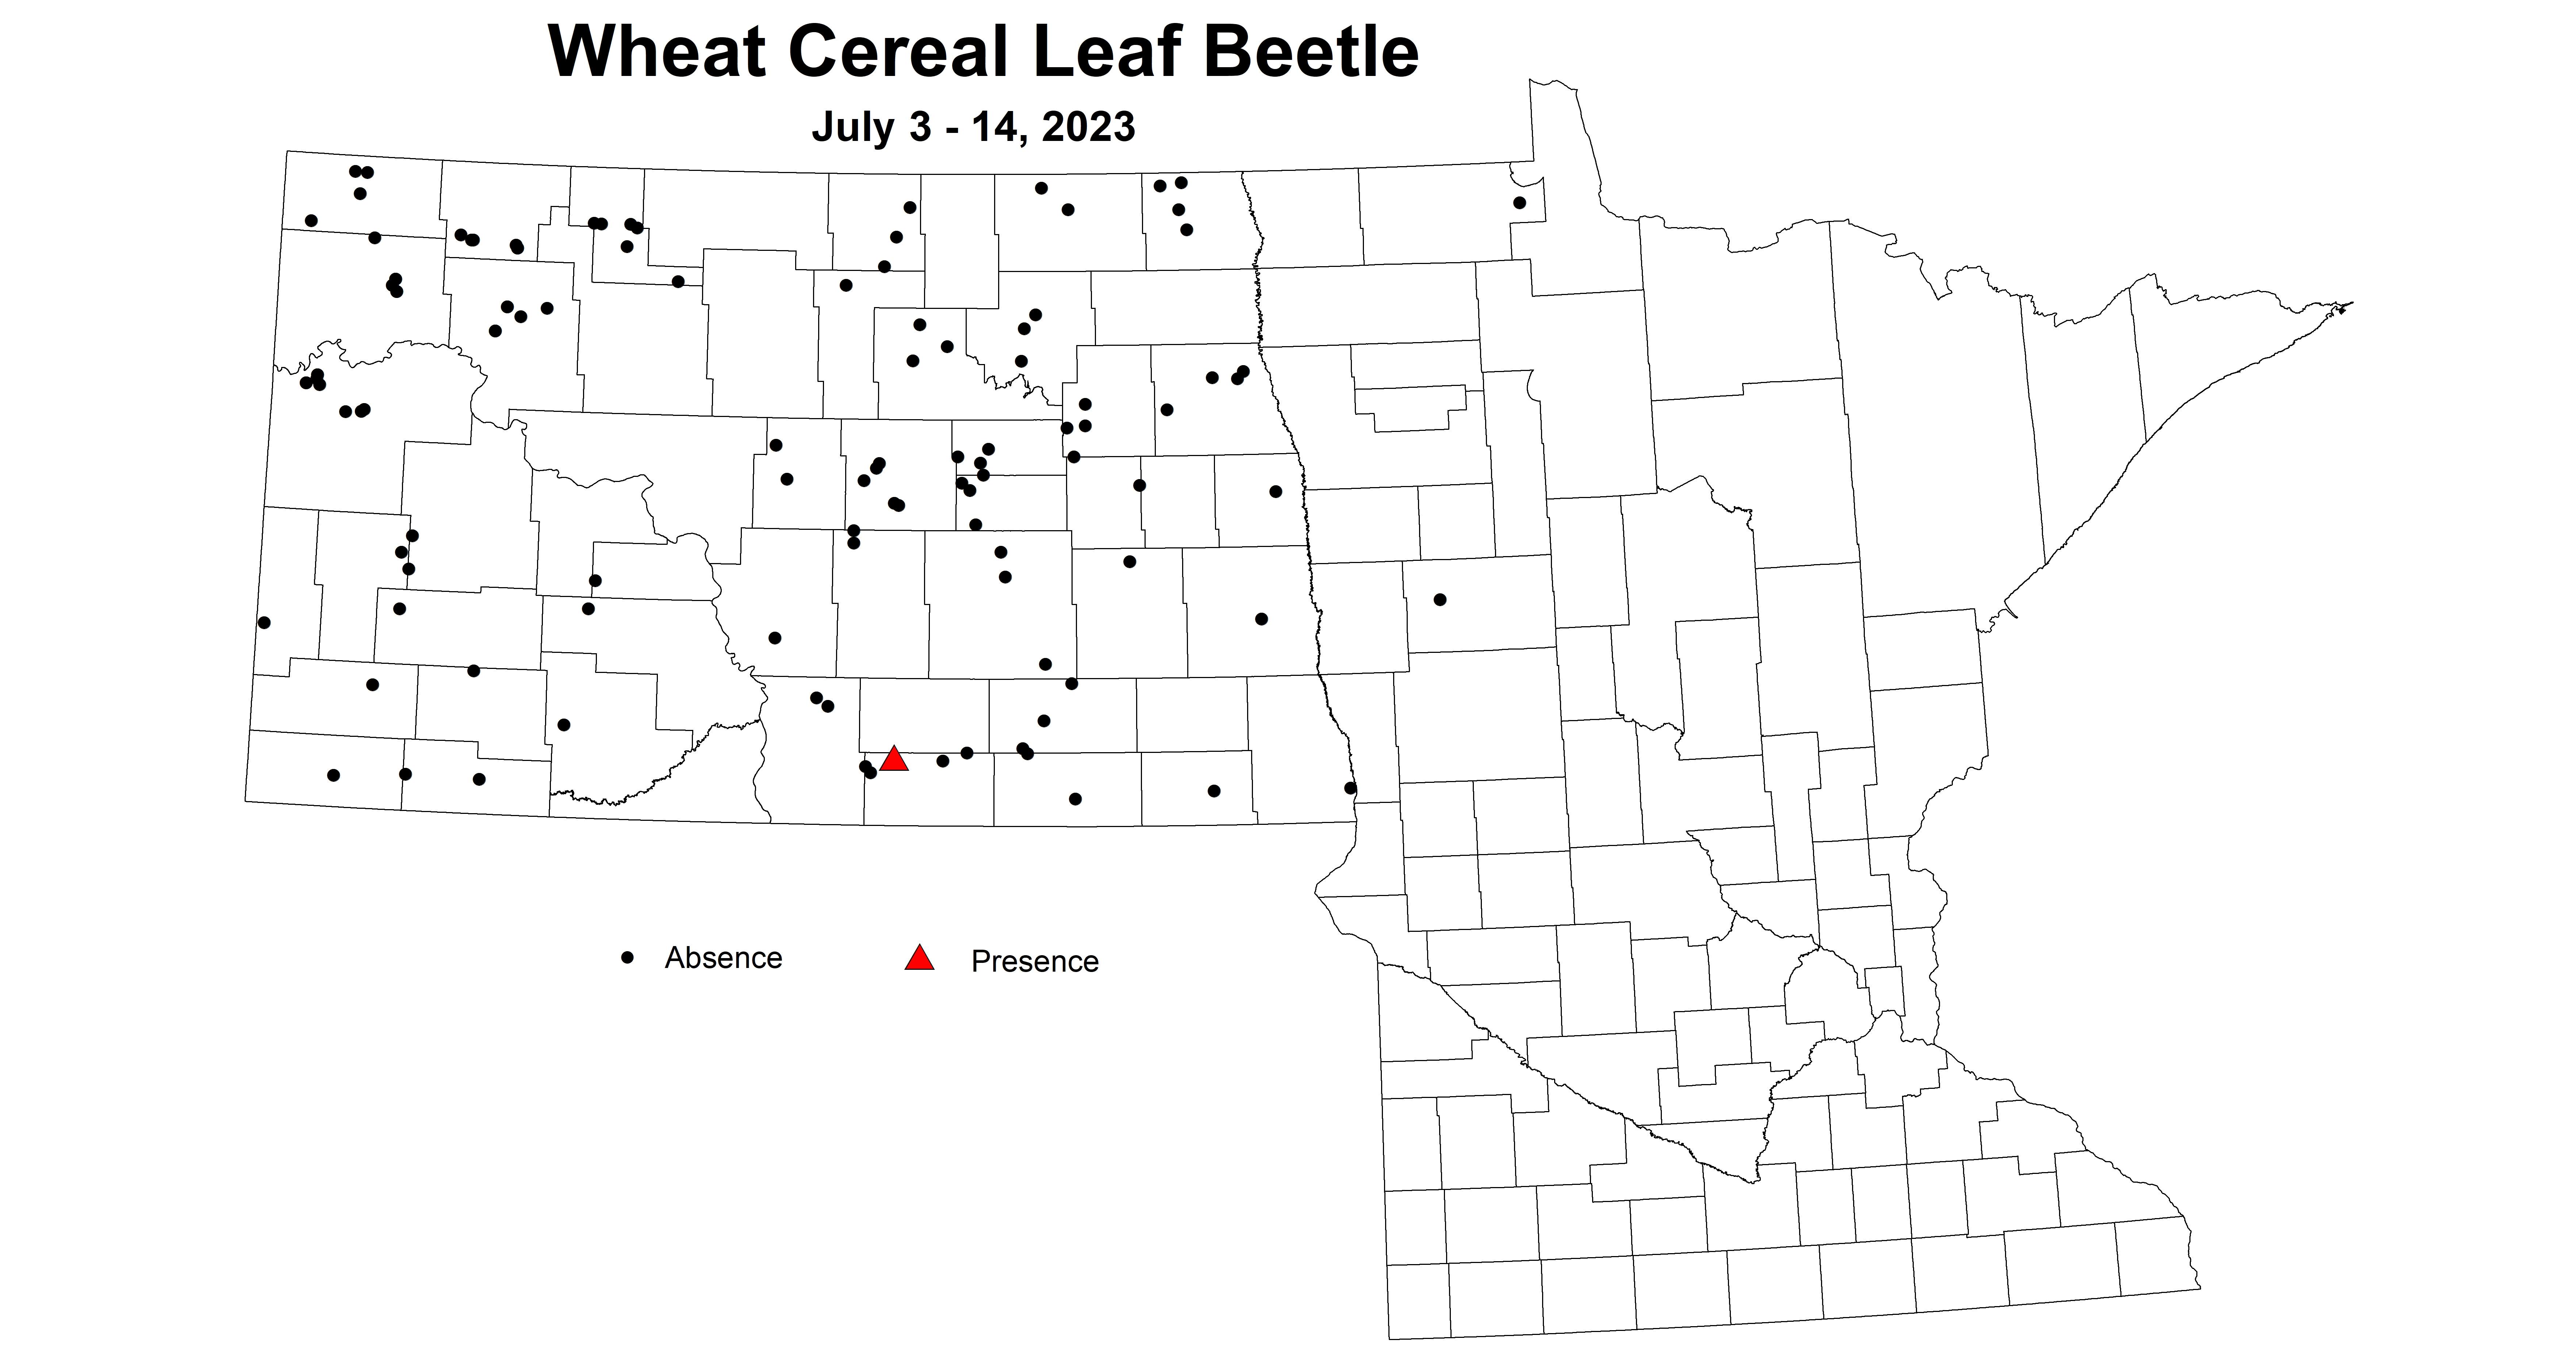 wheat cereal leaf beetle July 3-14 2023